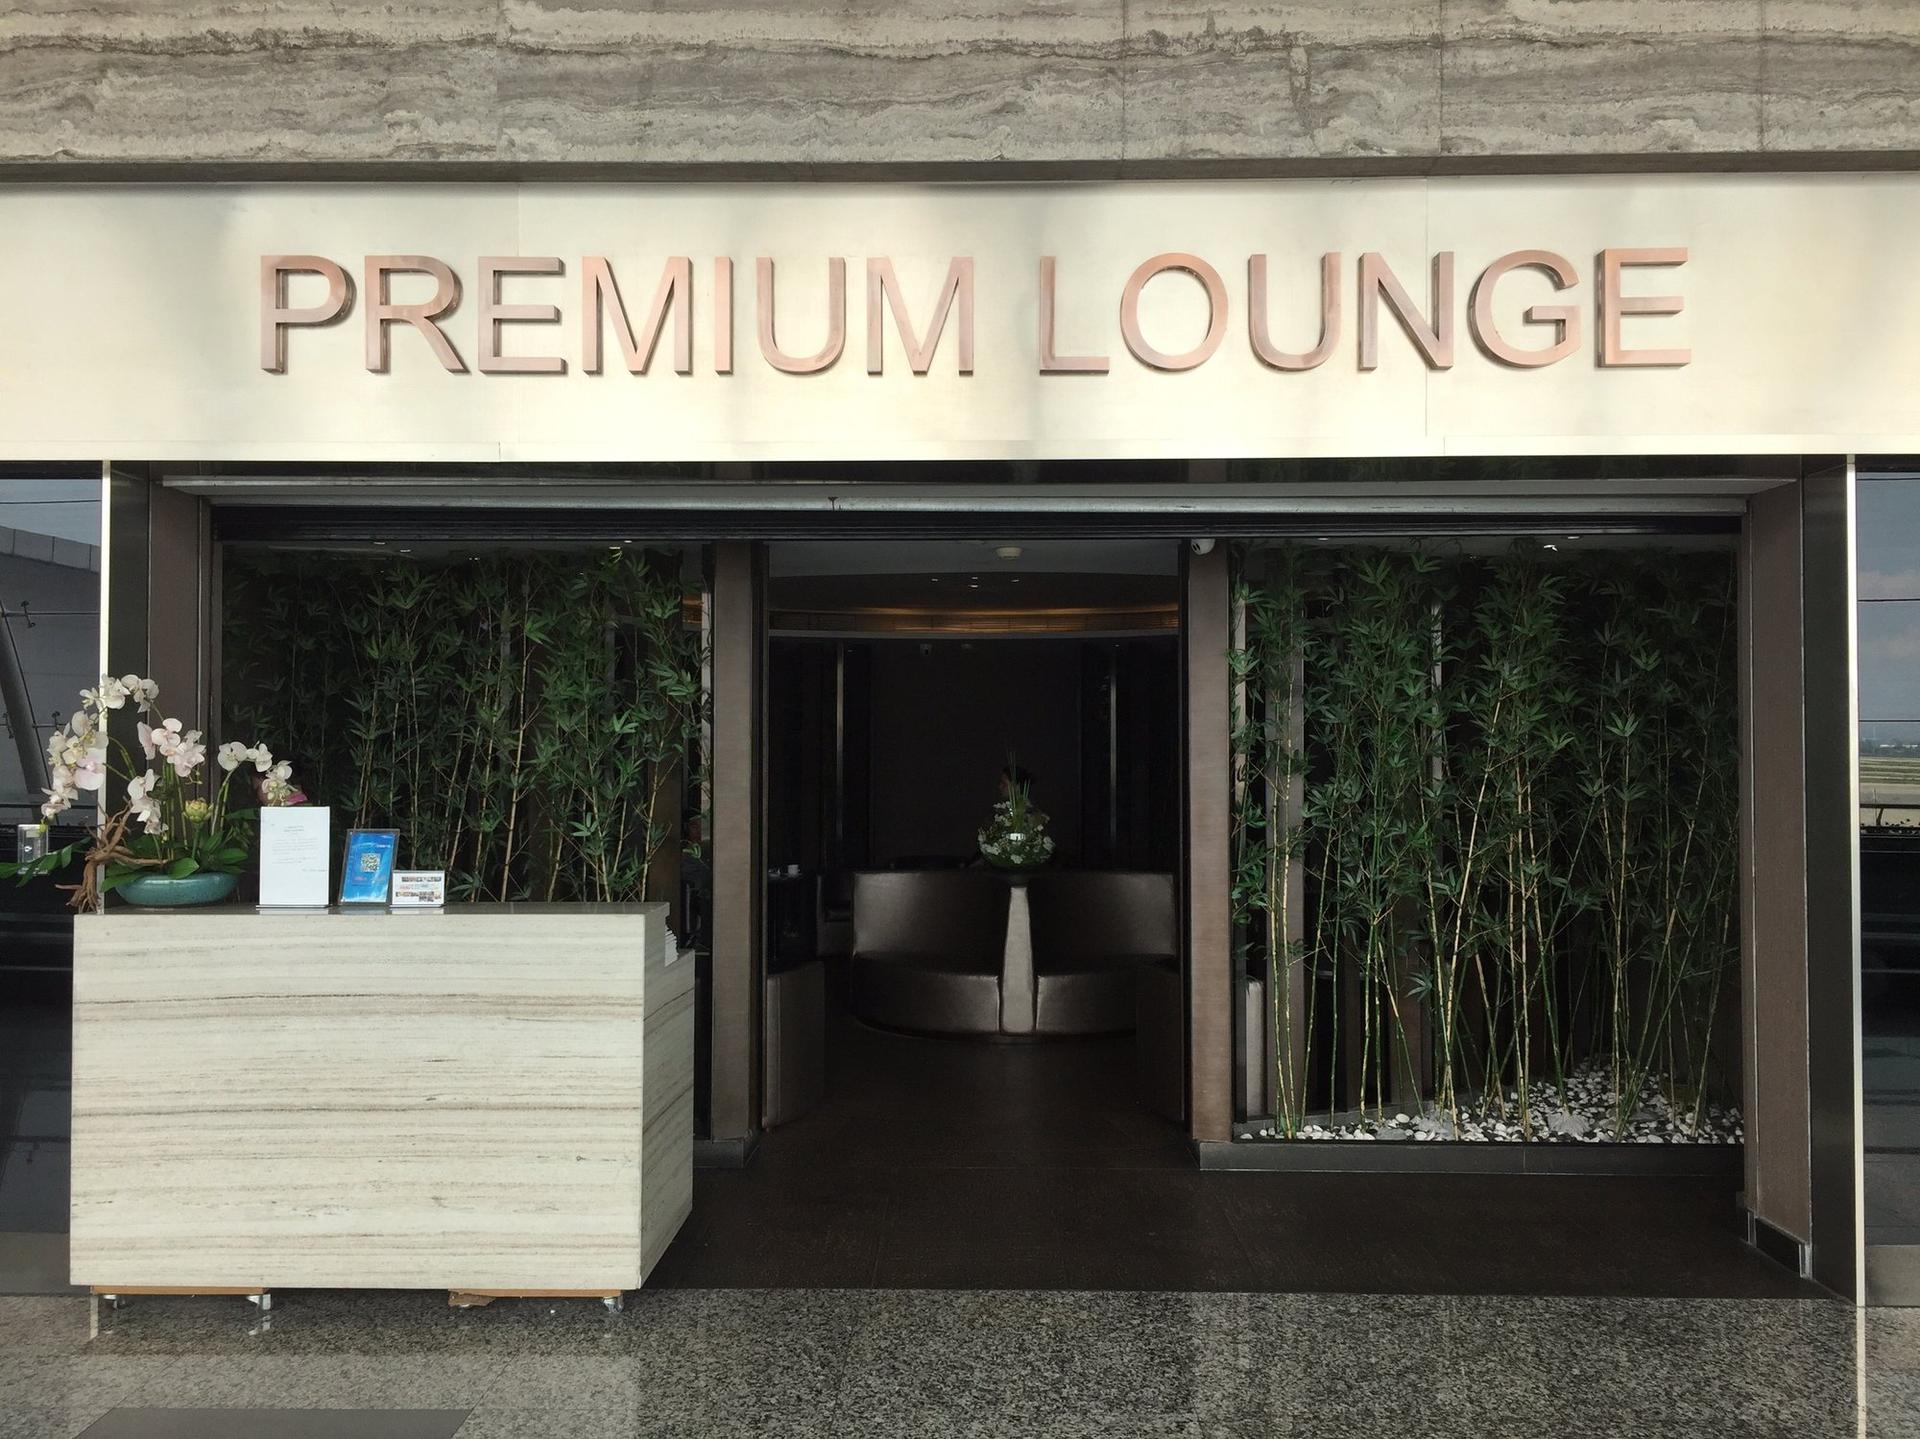 Premium Lounge image 2 of 18